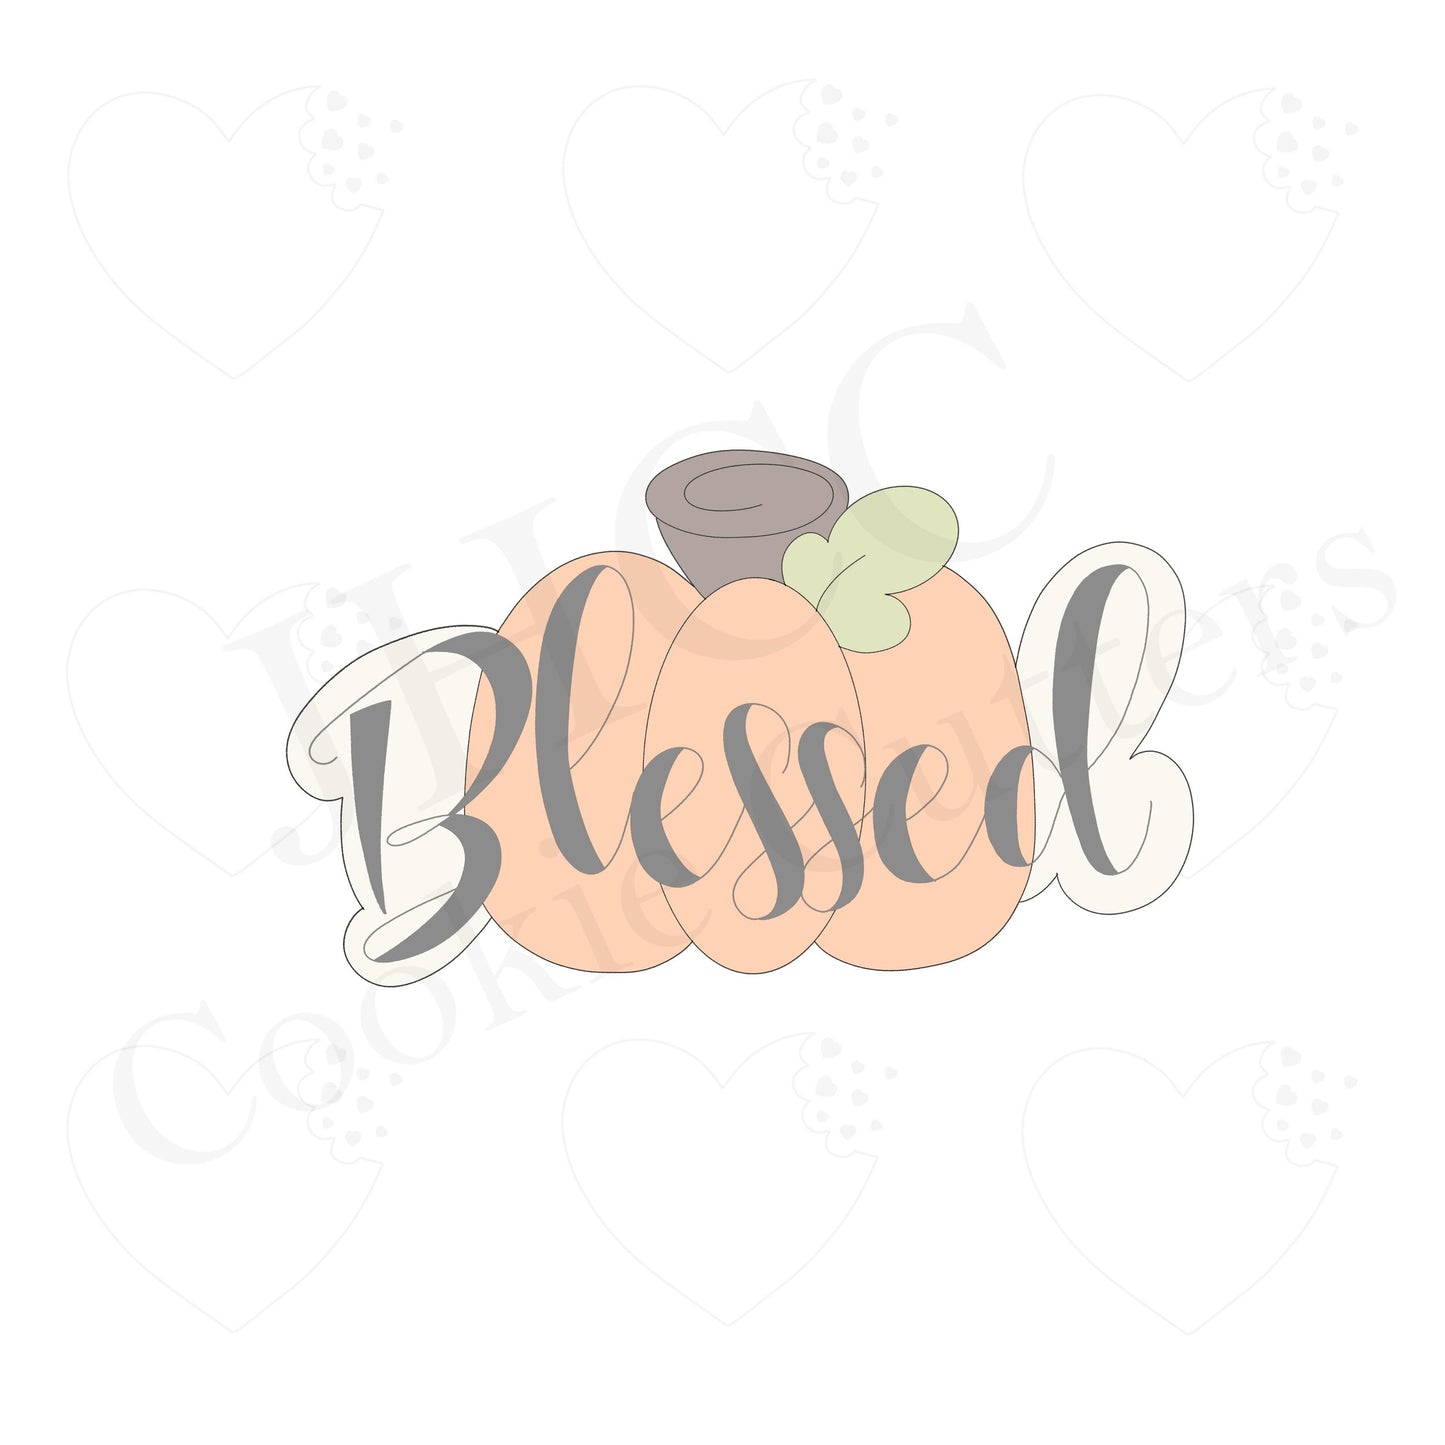 2019 Blessed Pumpkin - Cookie Cutter